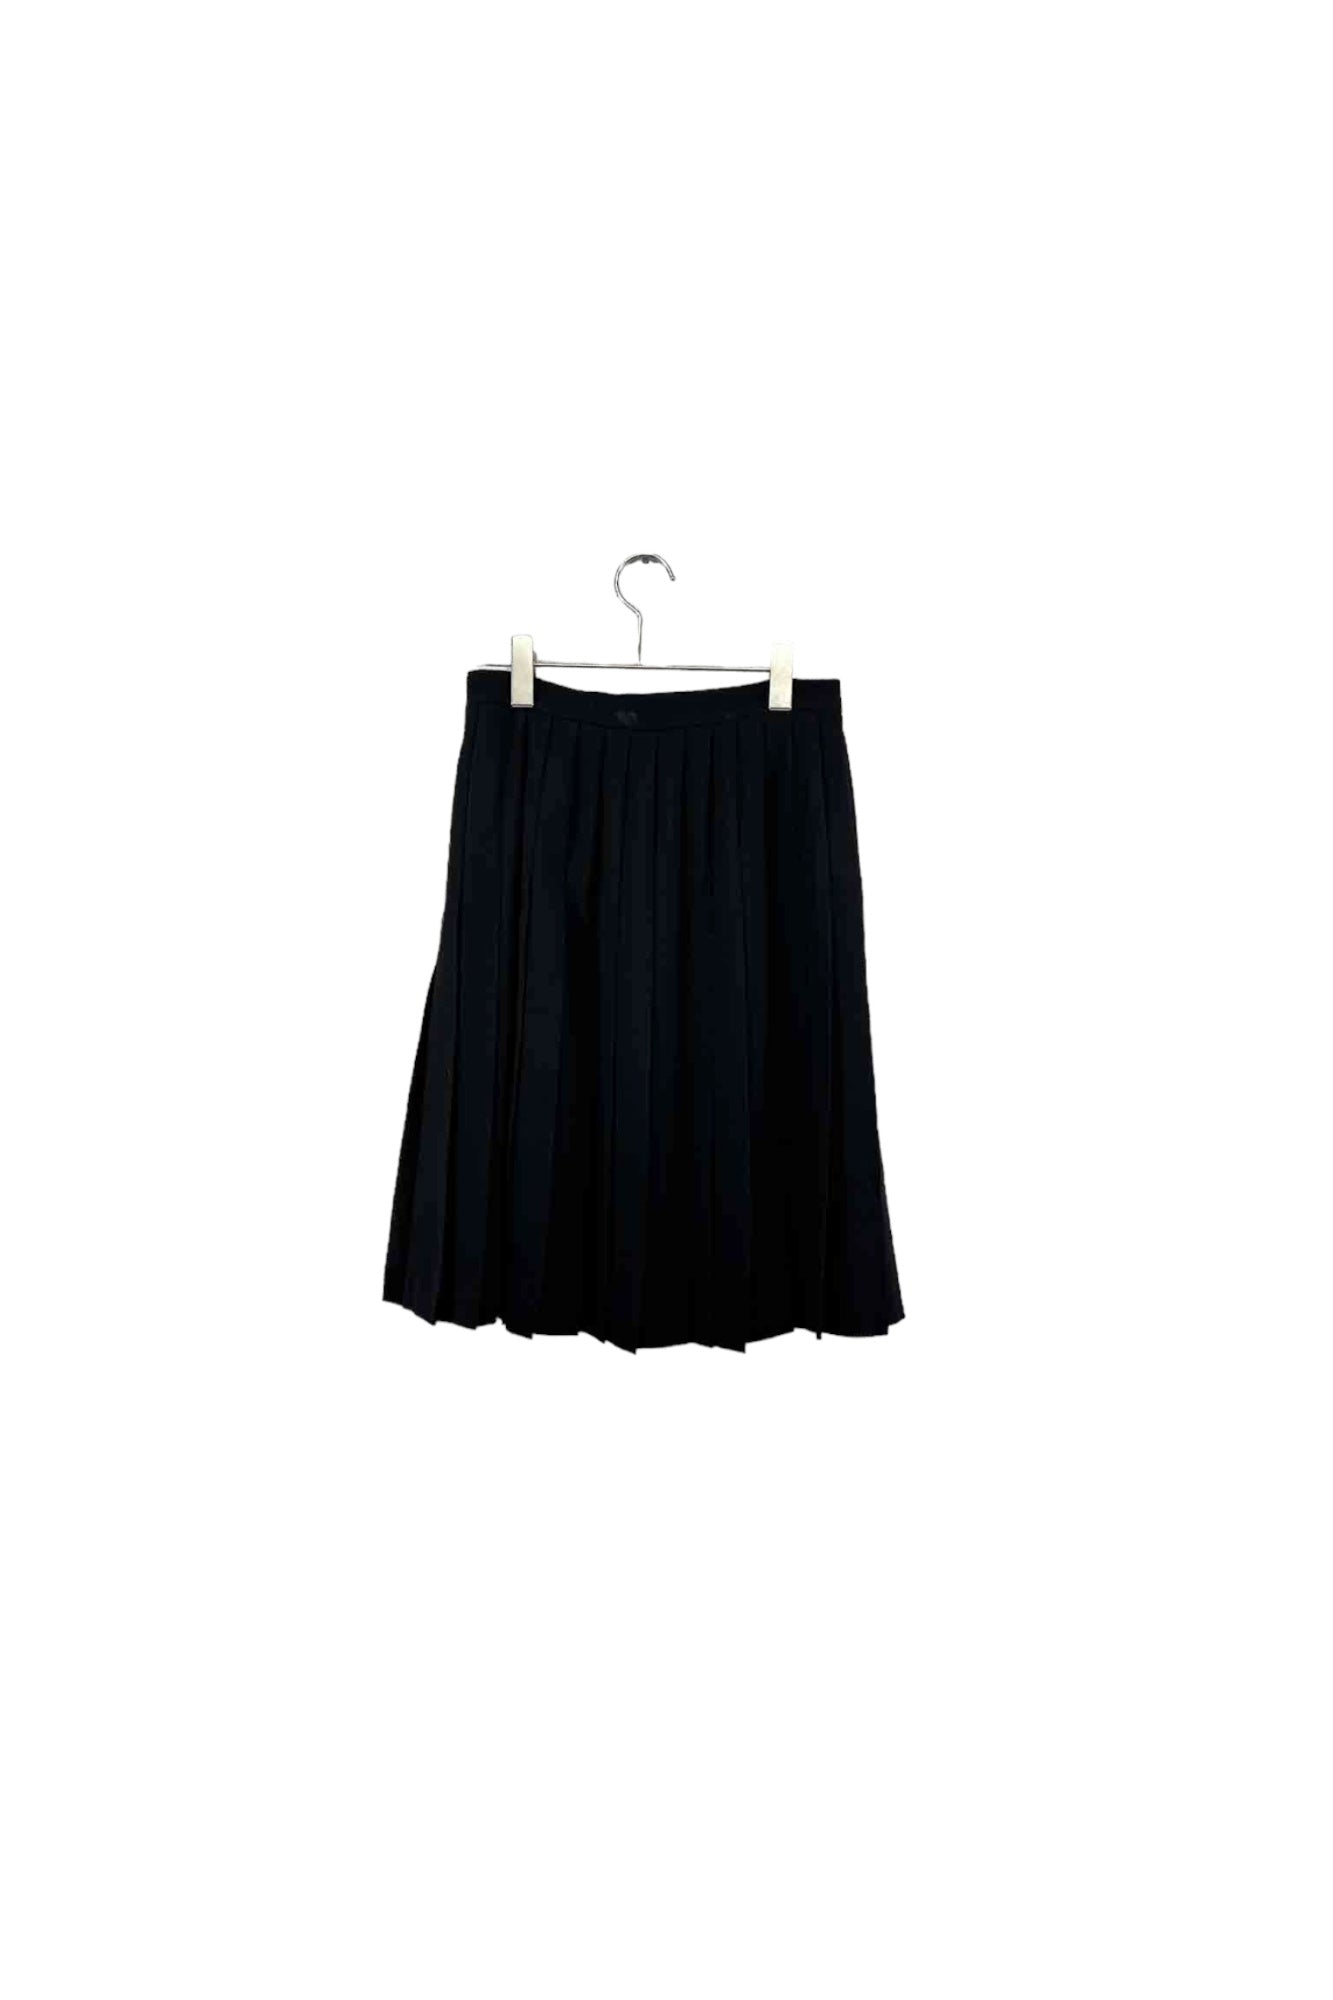 GIVENCHY HI FORMAL black pleats skirt